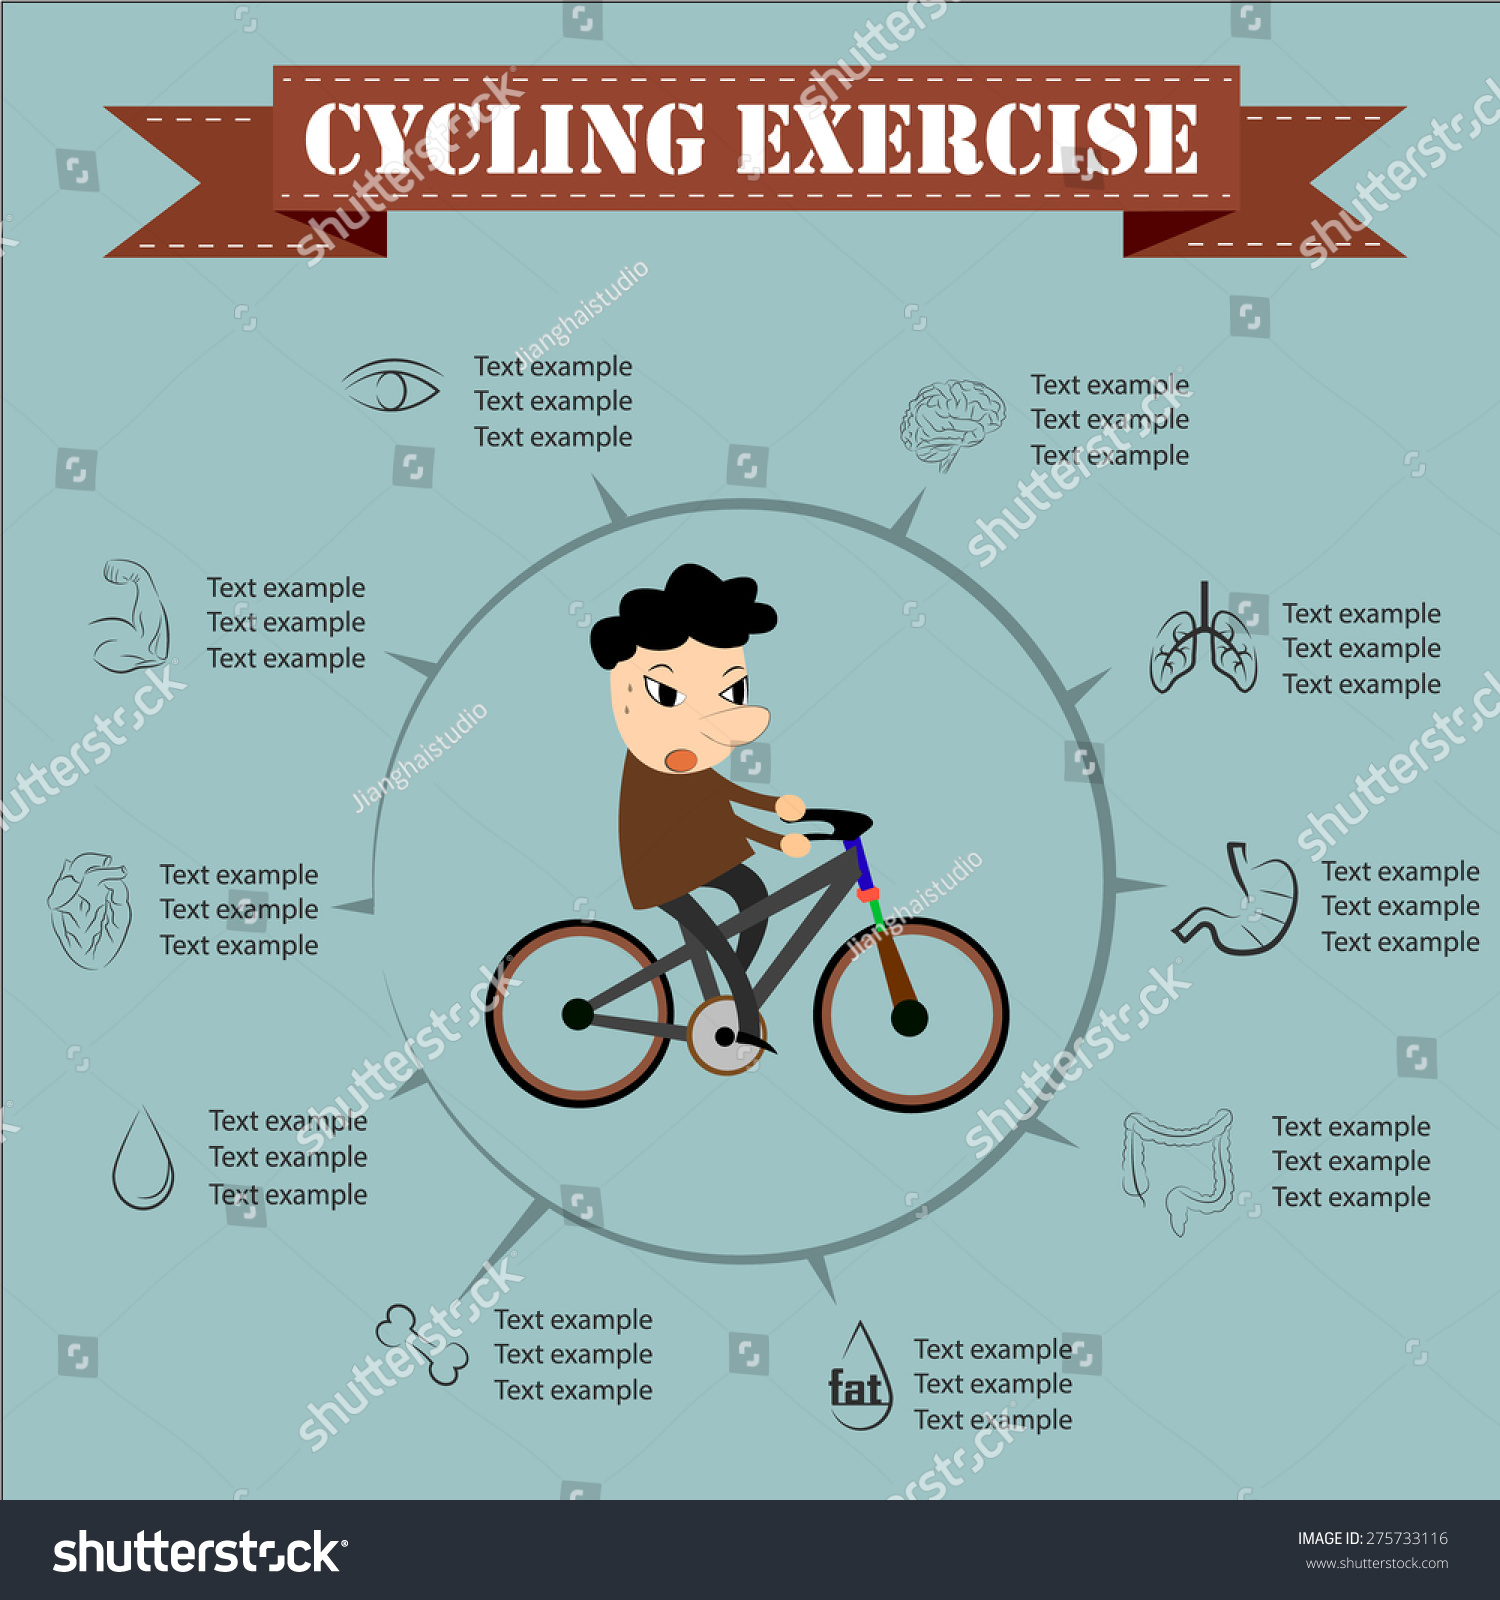 Benefits Cycling Exercise Vector Stock Vector 275733116 Shutterstock throughout Benefits Of Cycling Exercise